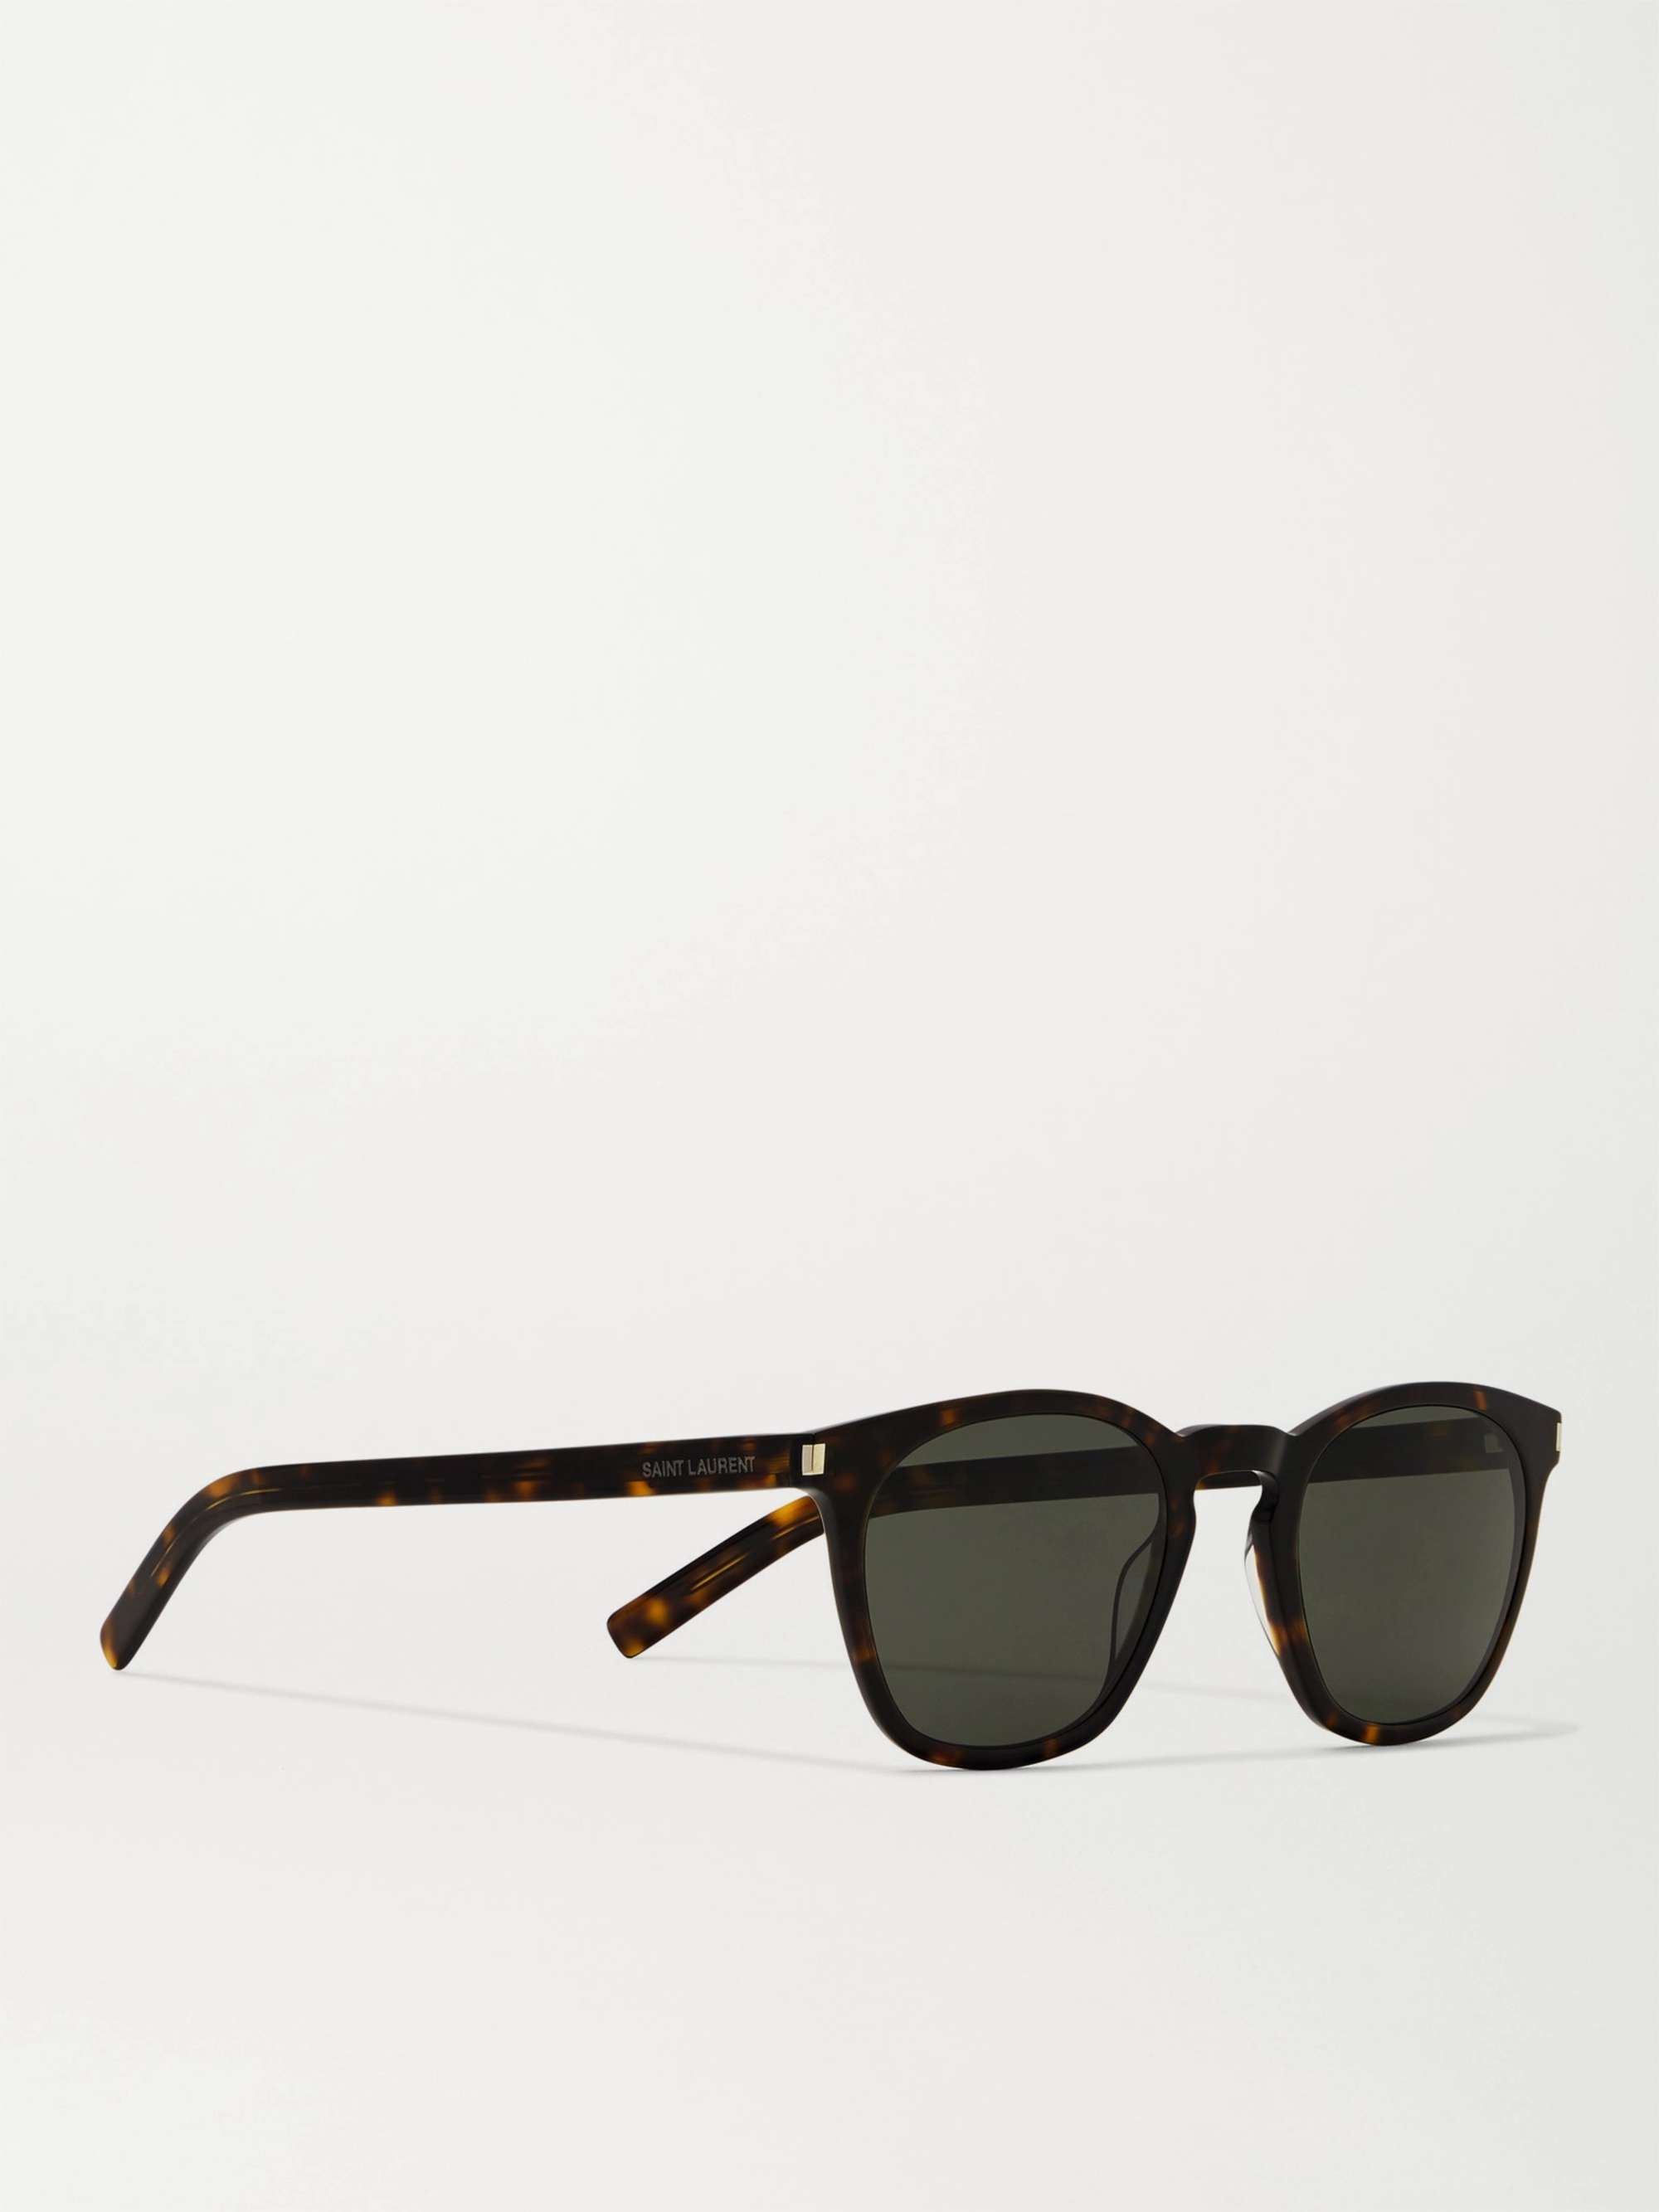 SAINT LAURENT EYEWEAR D-Frame Tortoiseshell Acetate Sunglasses